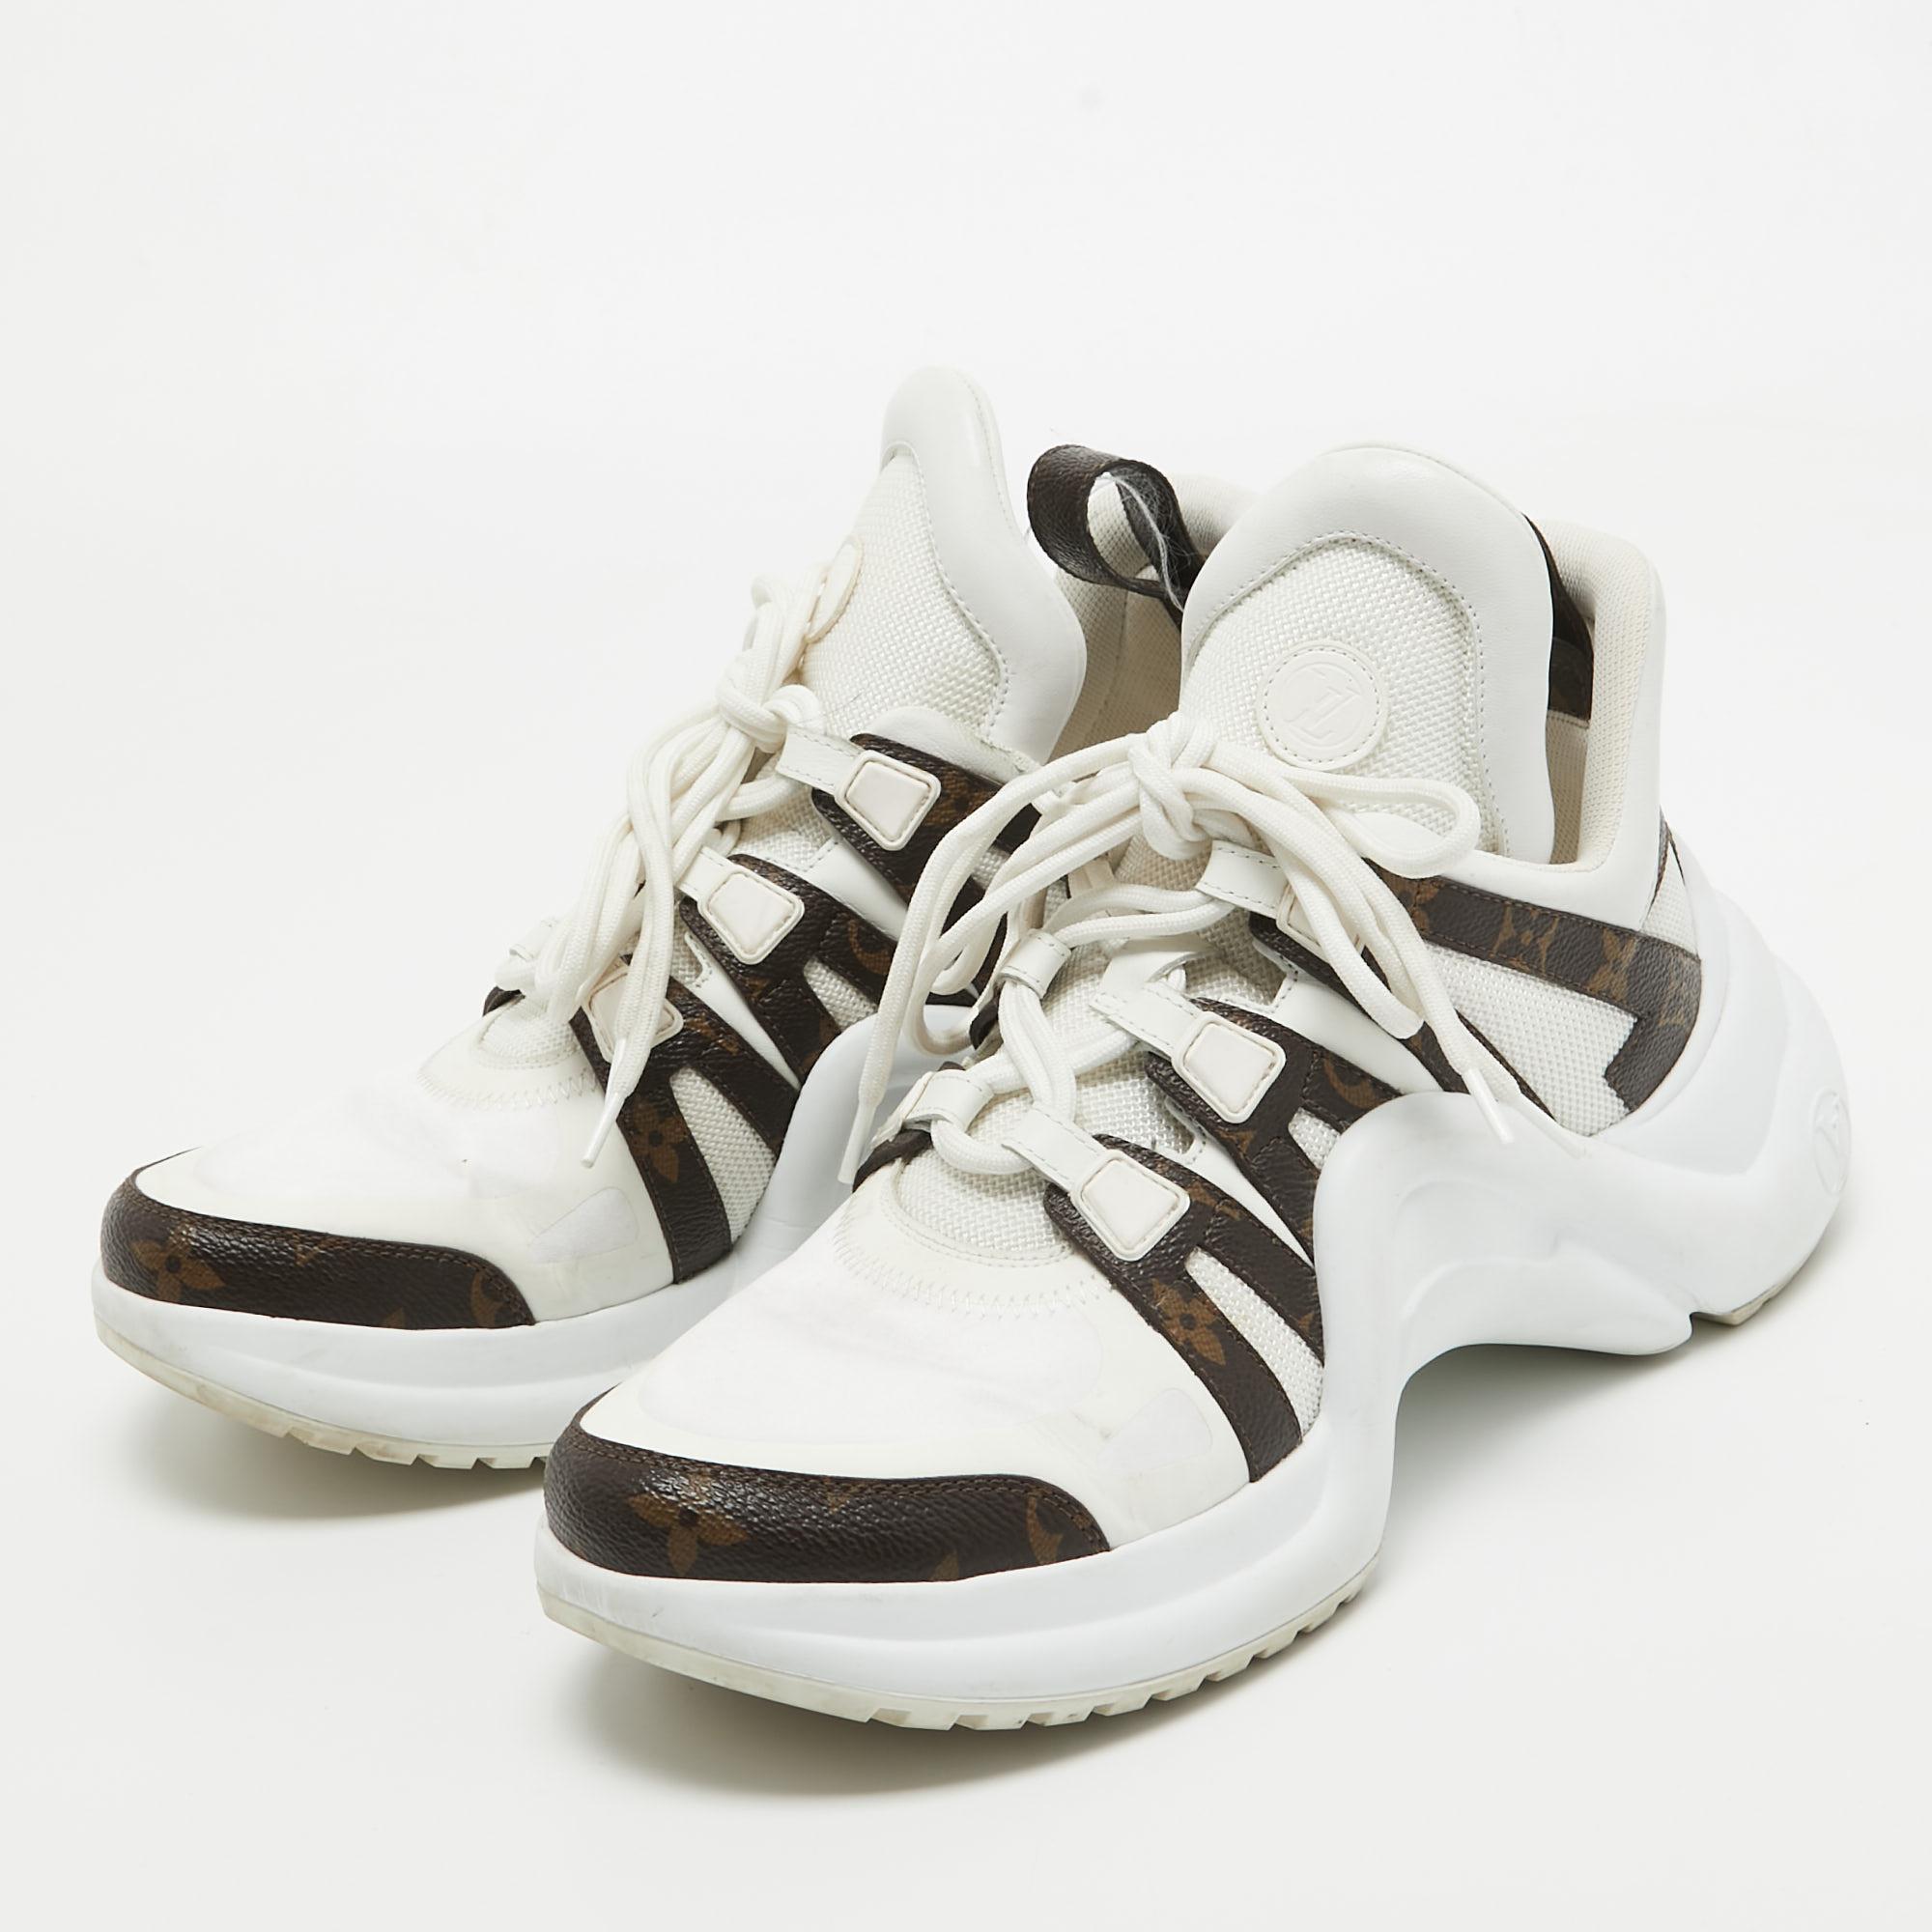 Louis Vuitton White/Brown Nylon and Monogram Canvas Archlight Sneakers Size 41 3